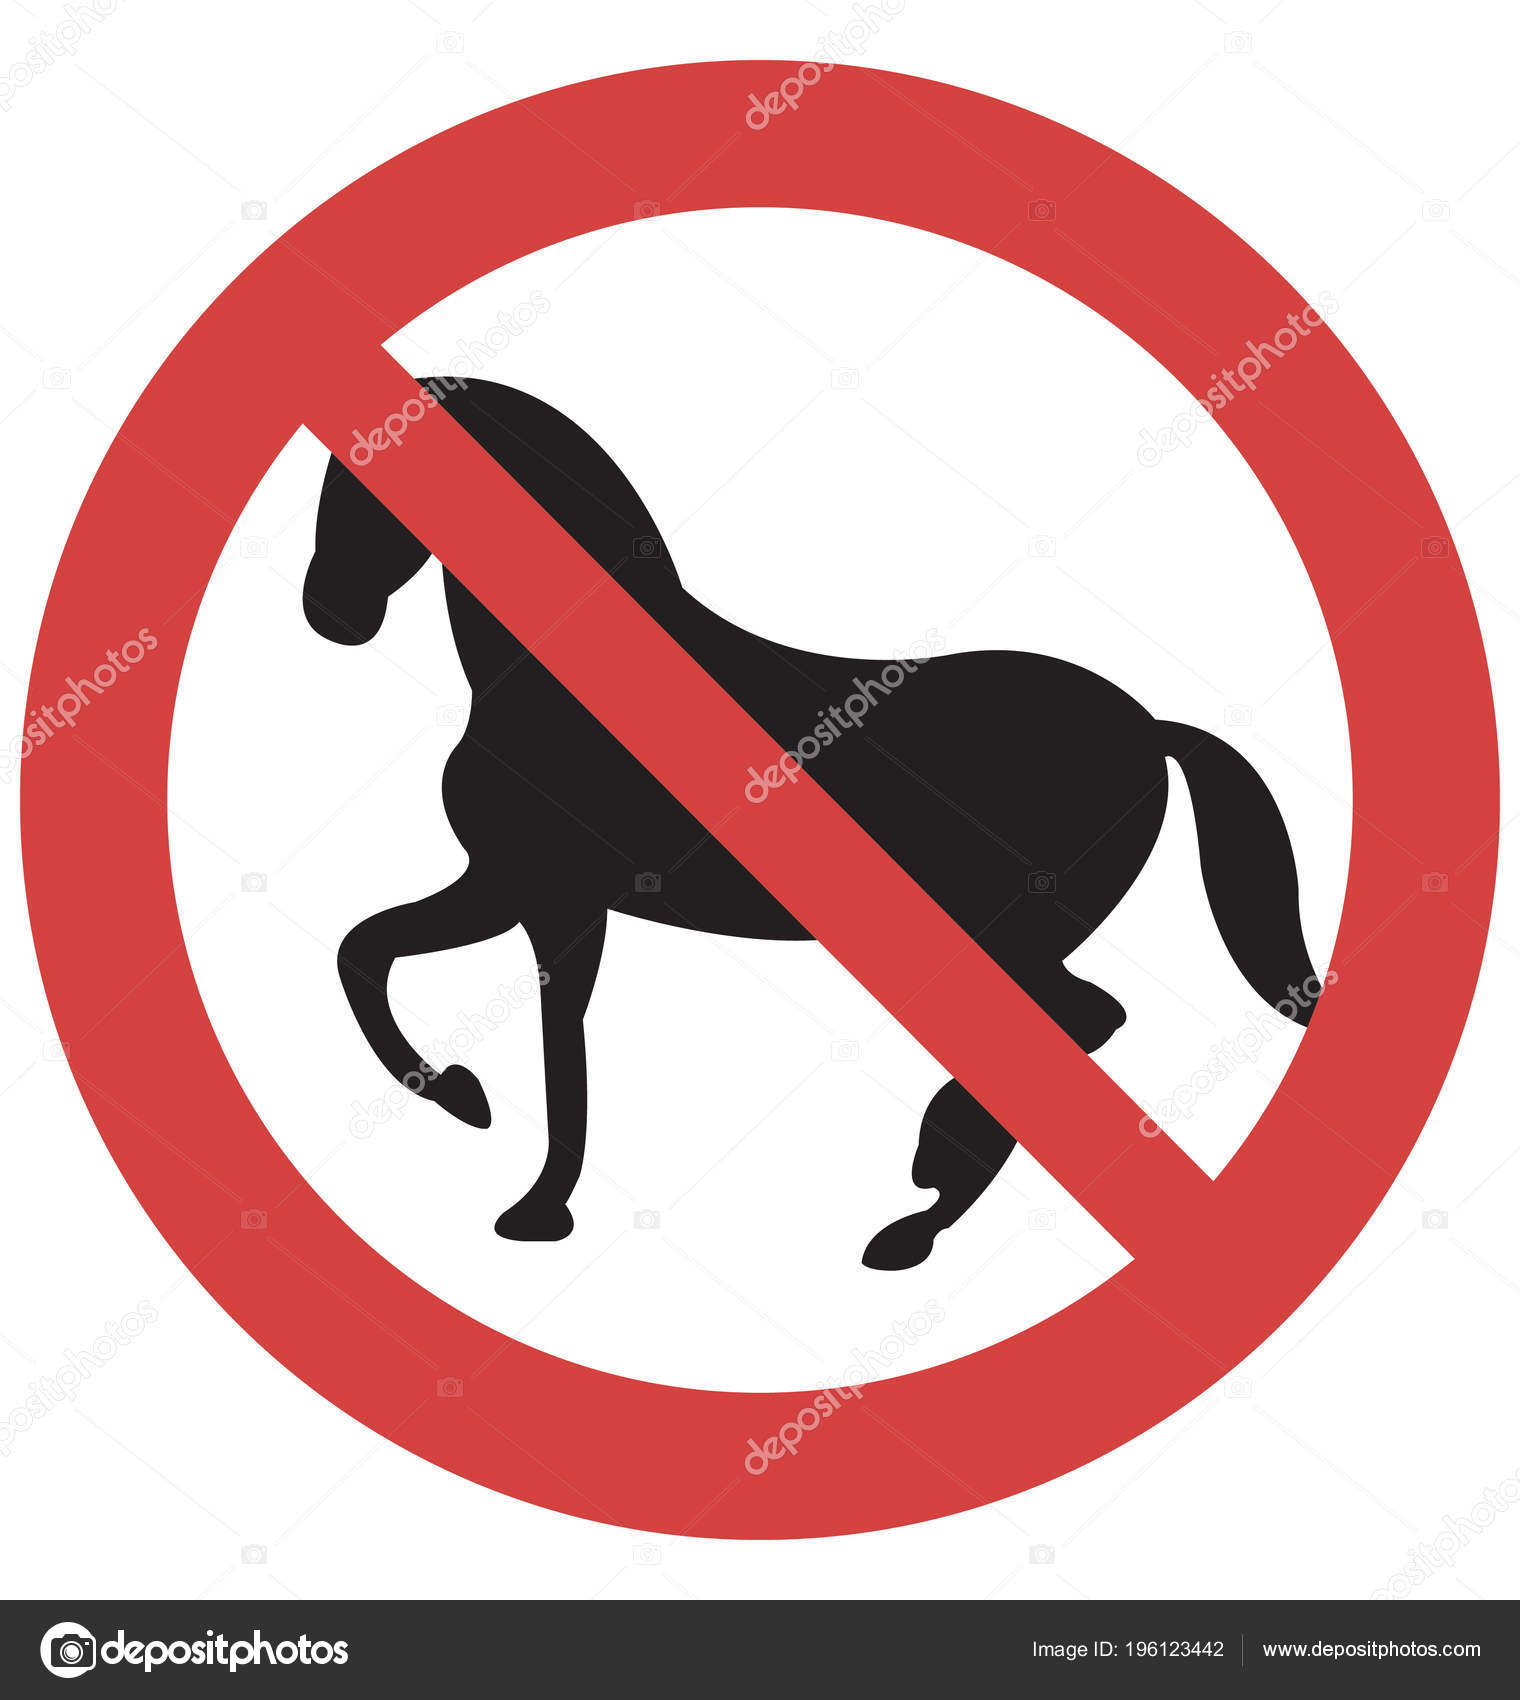 depositphotos_196123442-stock-illustration-stop-horse-vector-icon.jpg